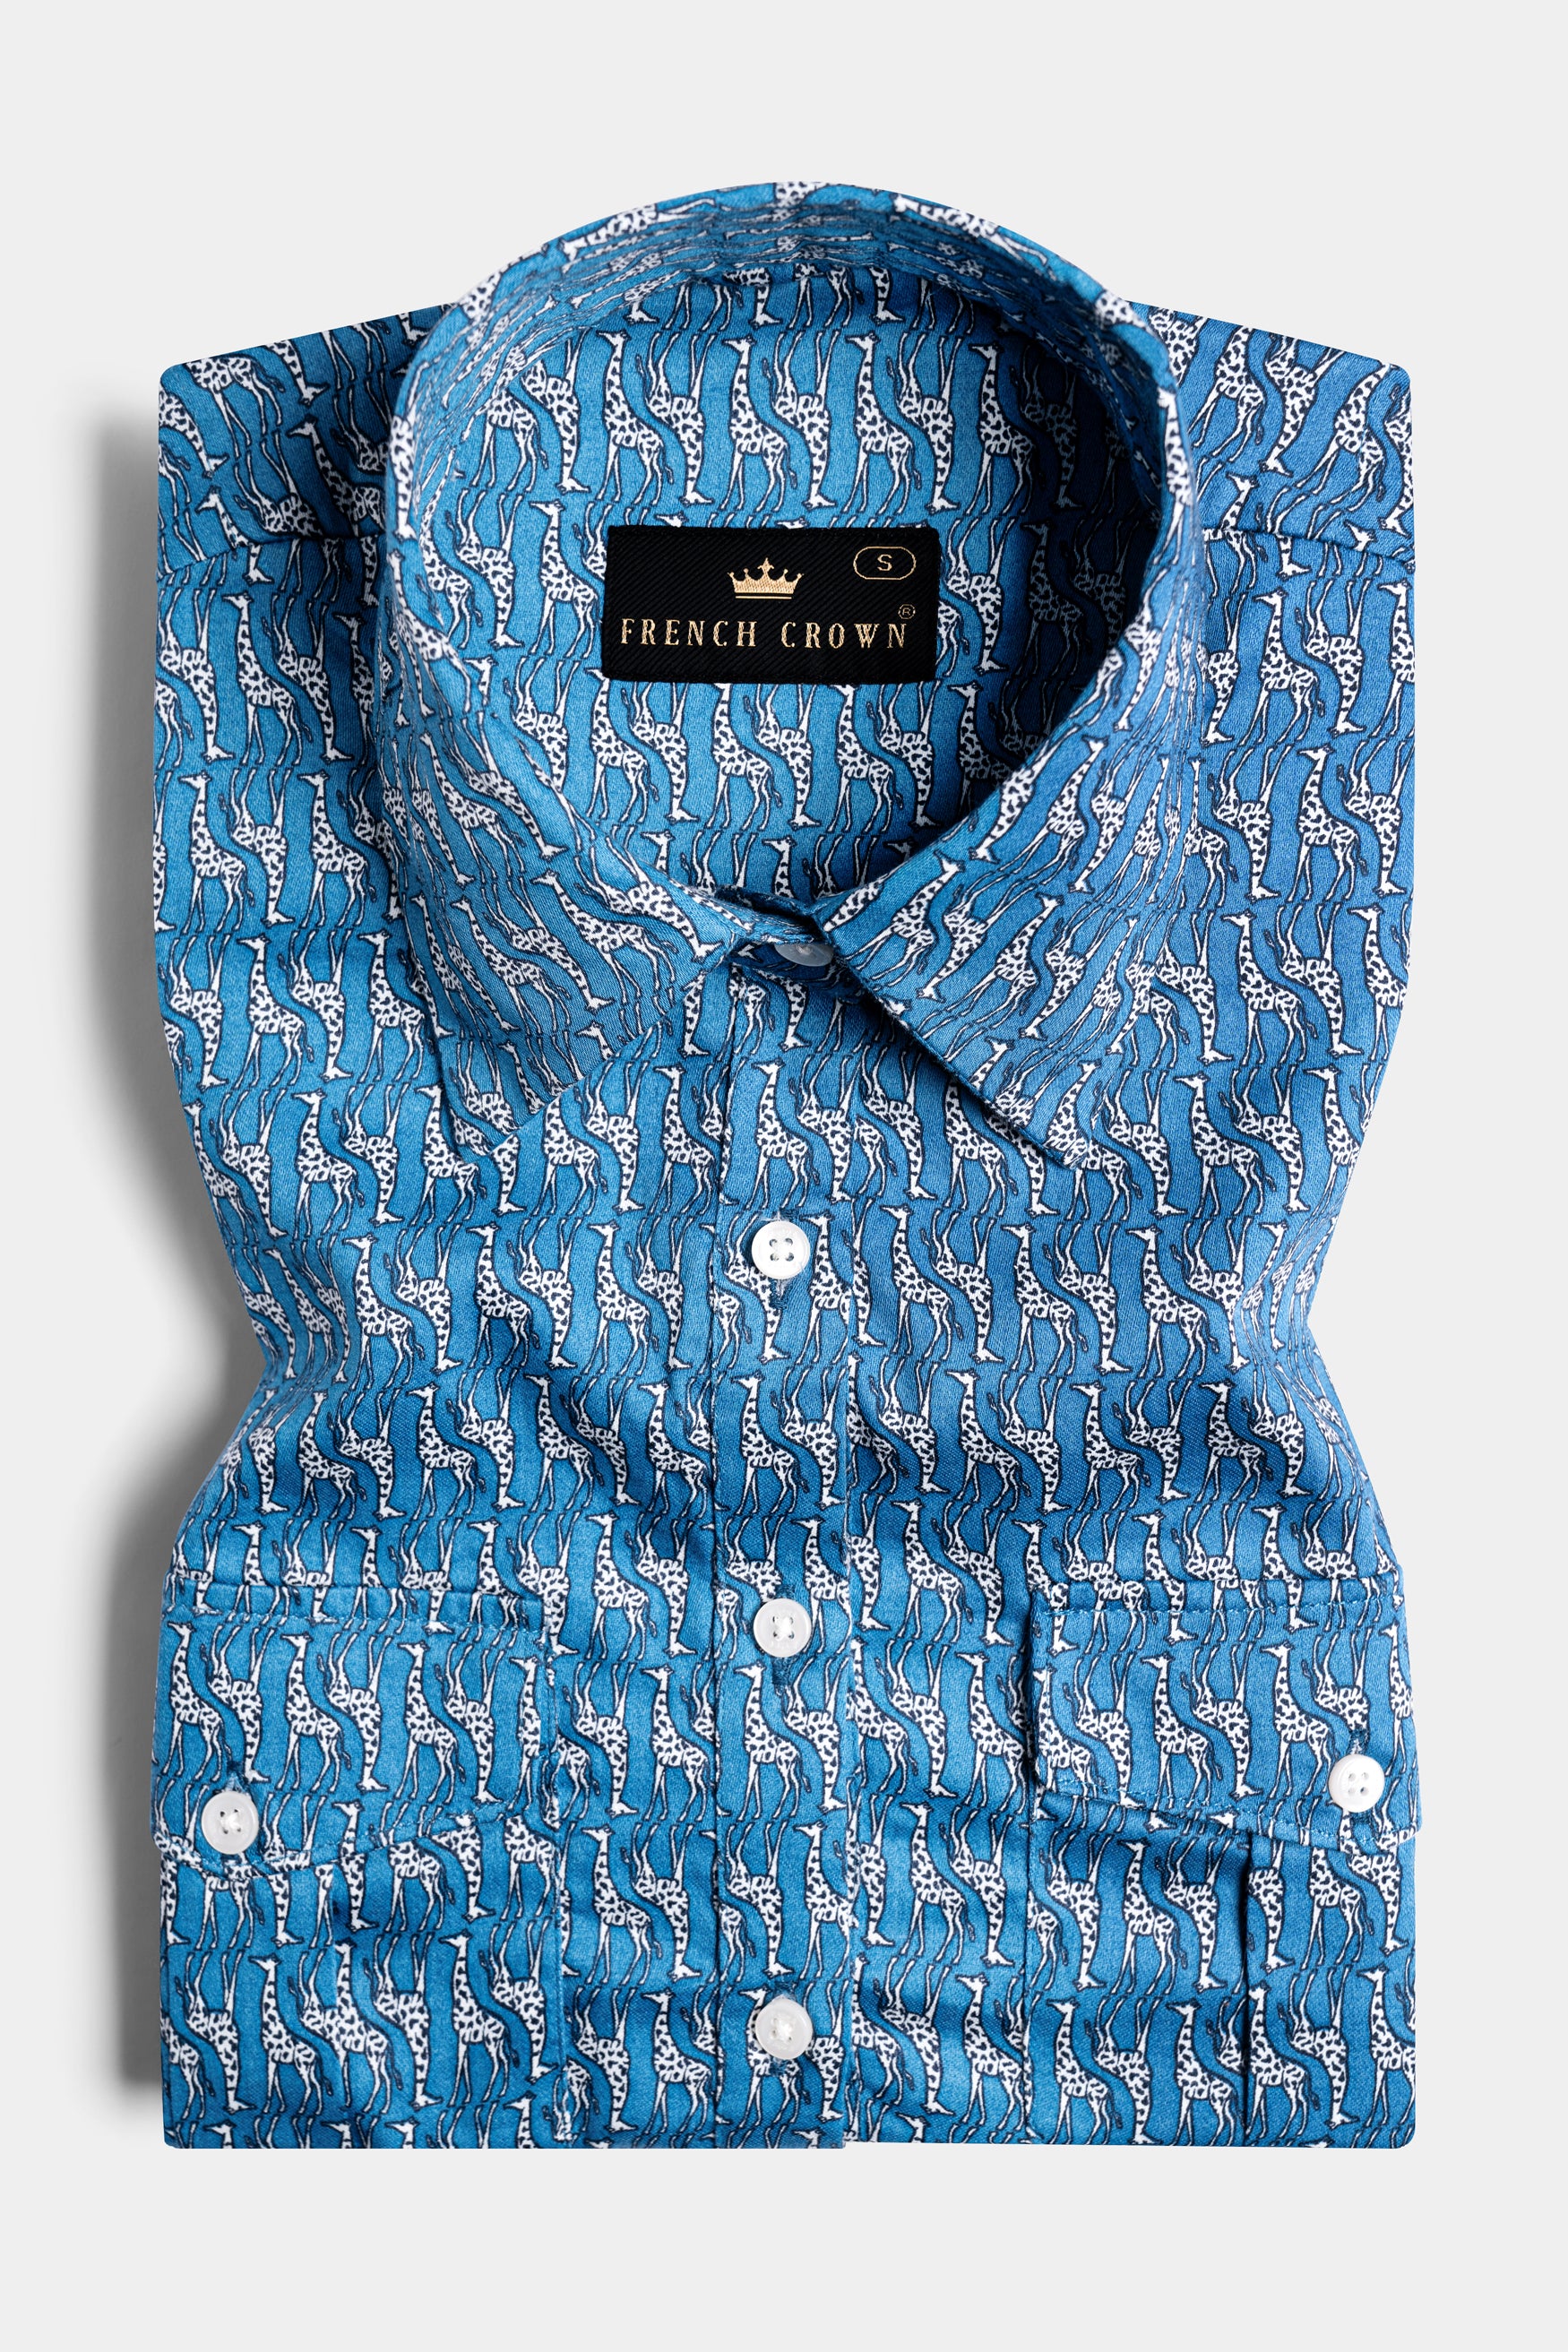 Peacock Blue and Bright White Giraffes Printed Premium Cotton Designer Shirt